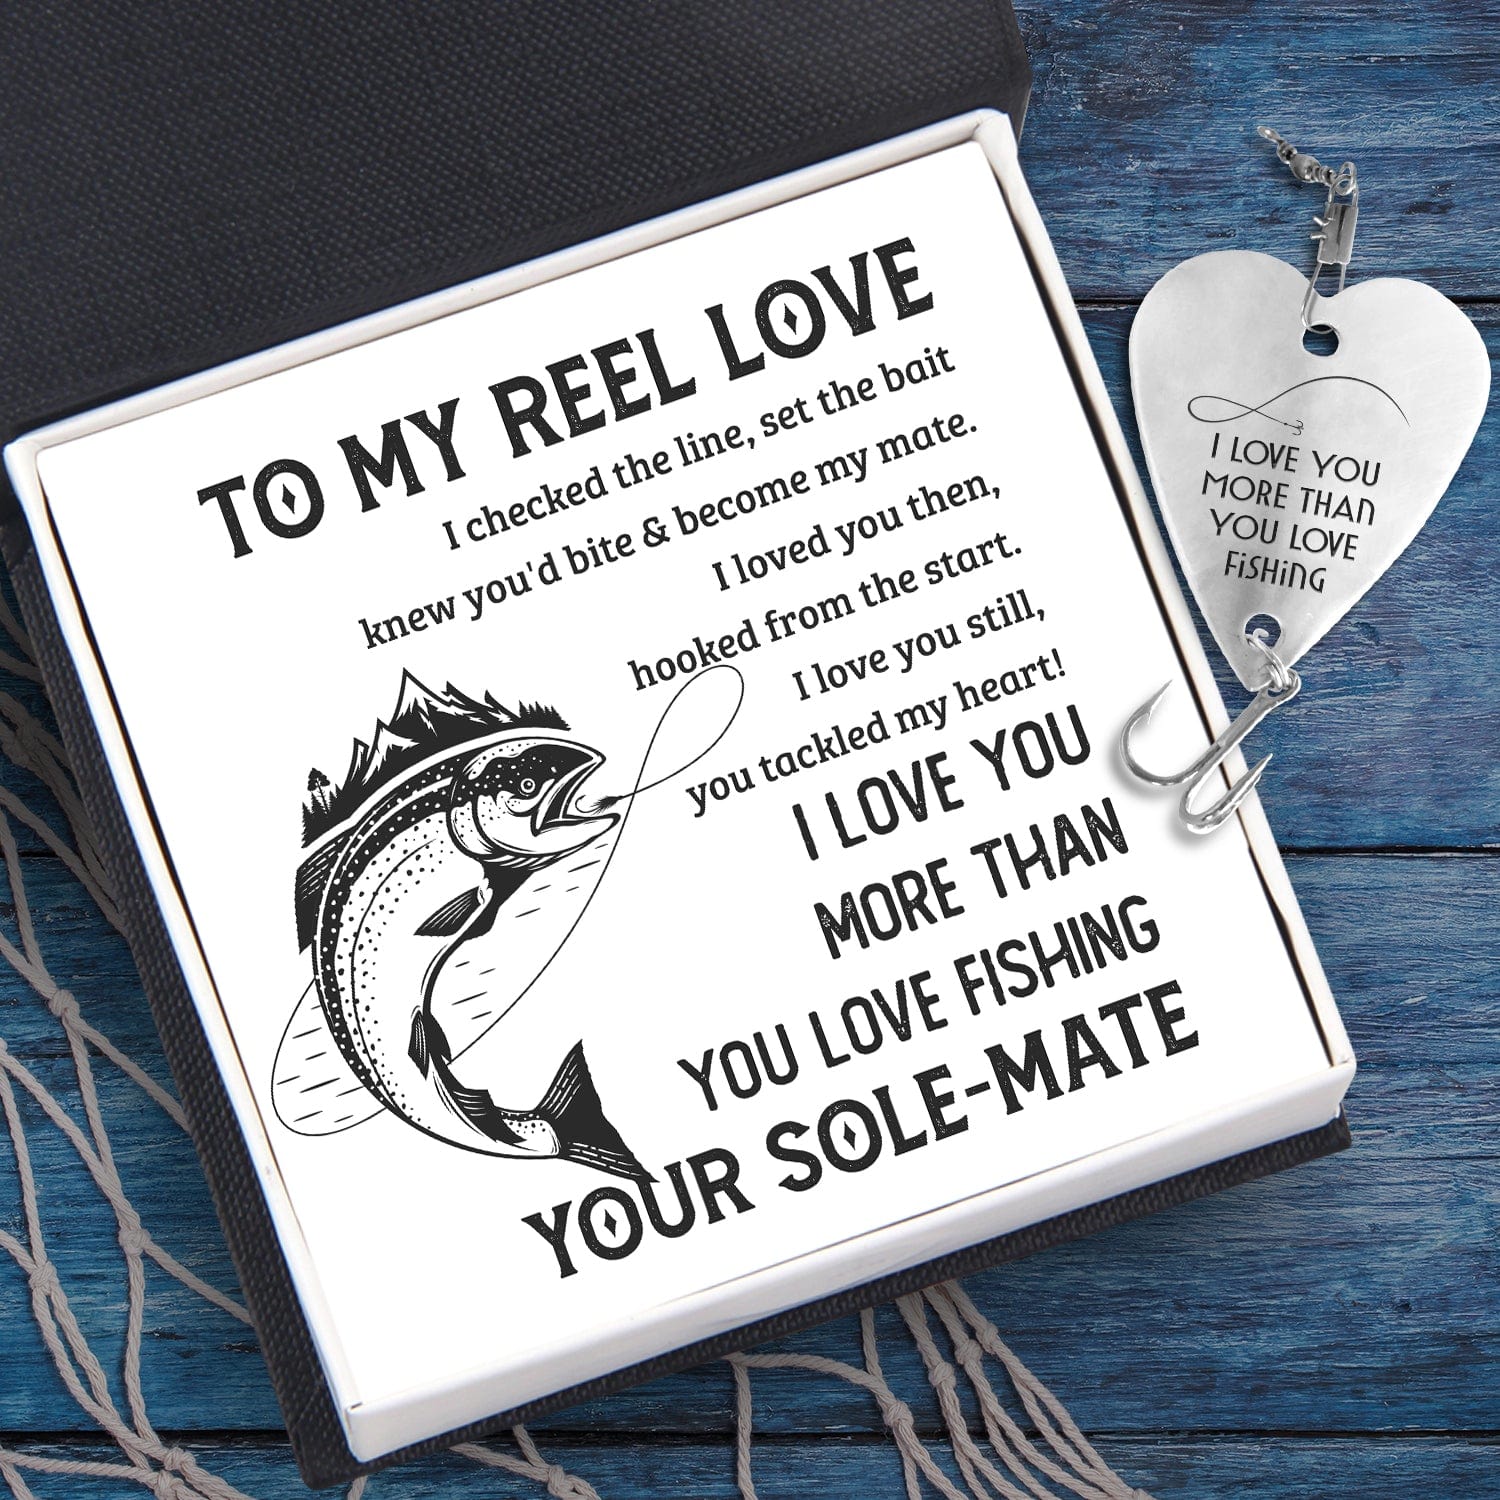 Heart Fishing Lure - Fishing - To My Reel Love - I Love You More Than You Love Fishing - Gfc13005